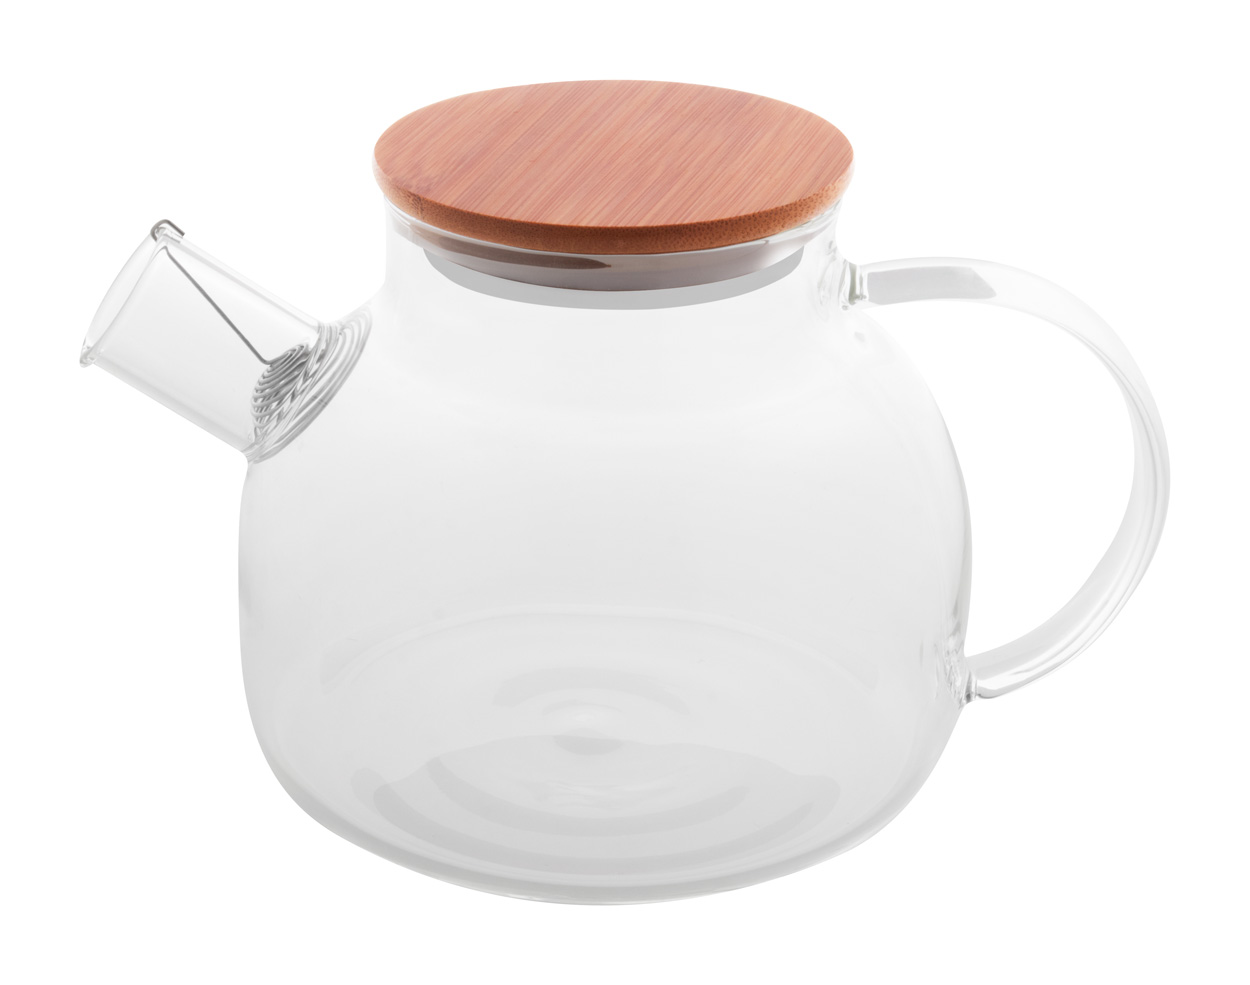 Tenda's glass teapot - transparent